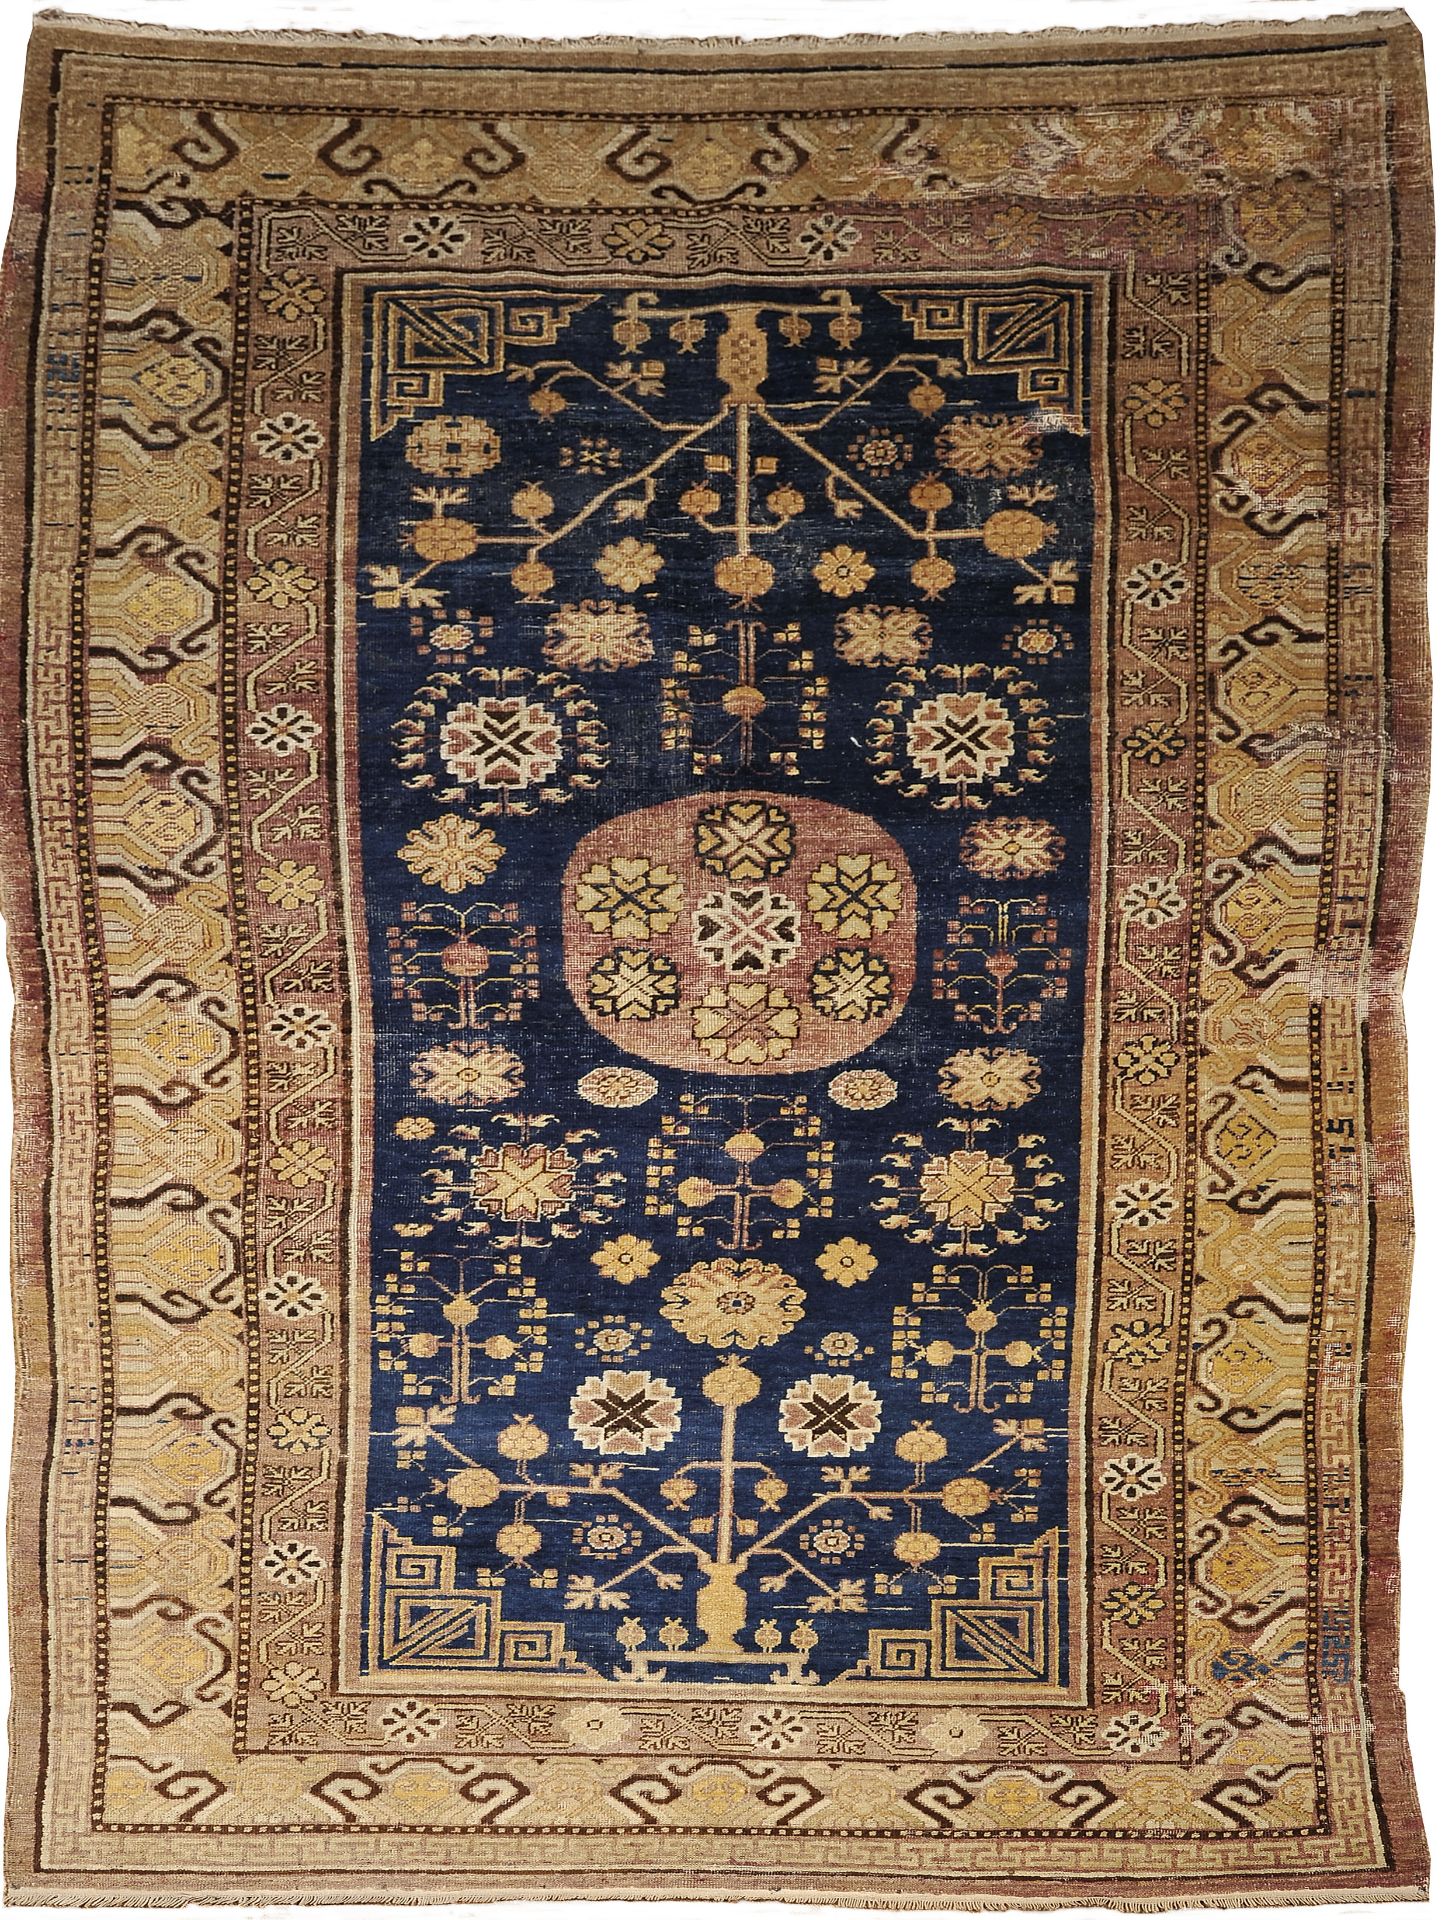 A Khotan carpet